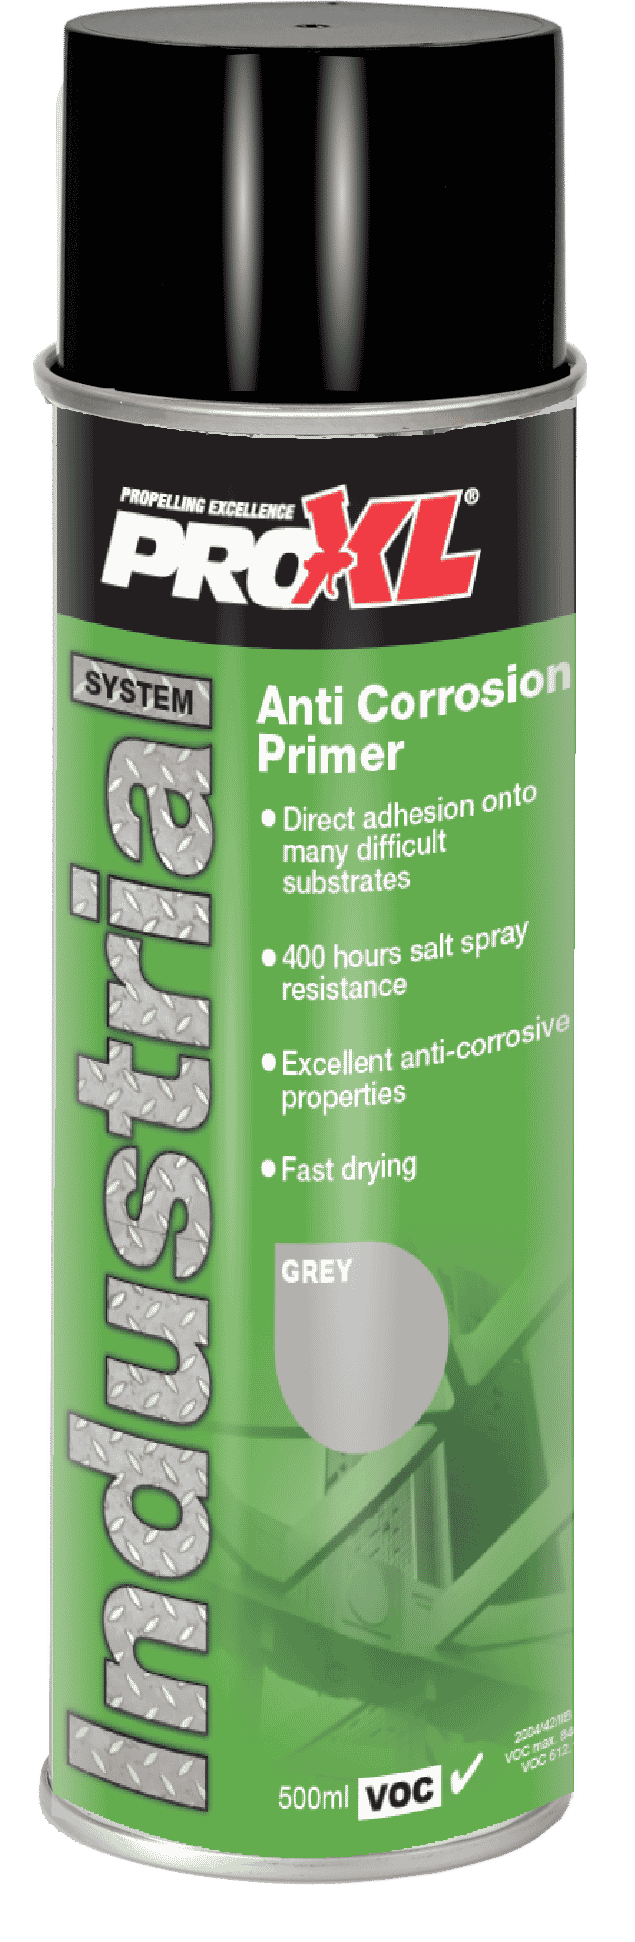 Anti-Corrosion Primer- Grey (500ml) Product Image